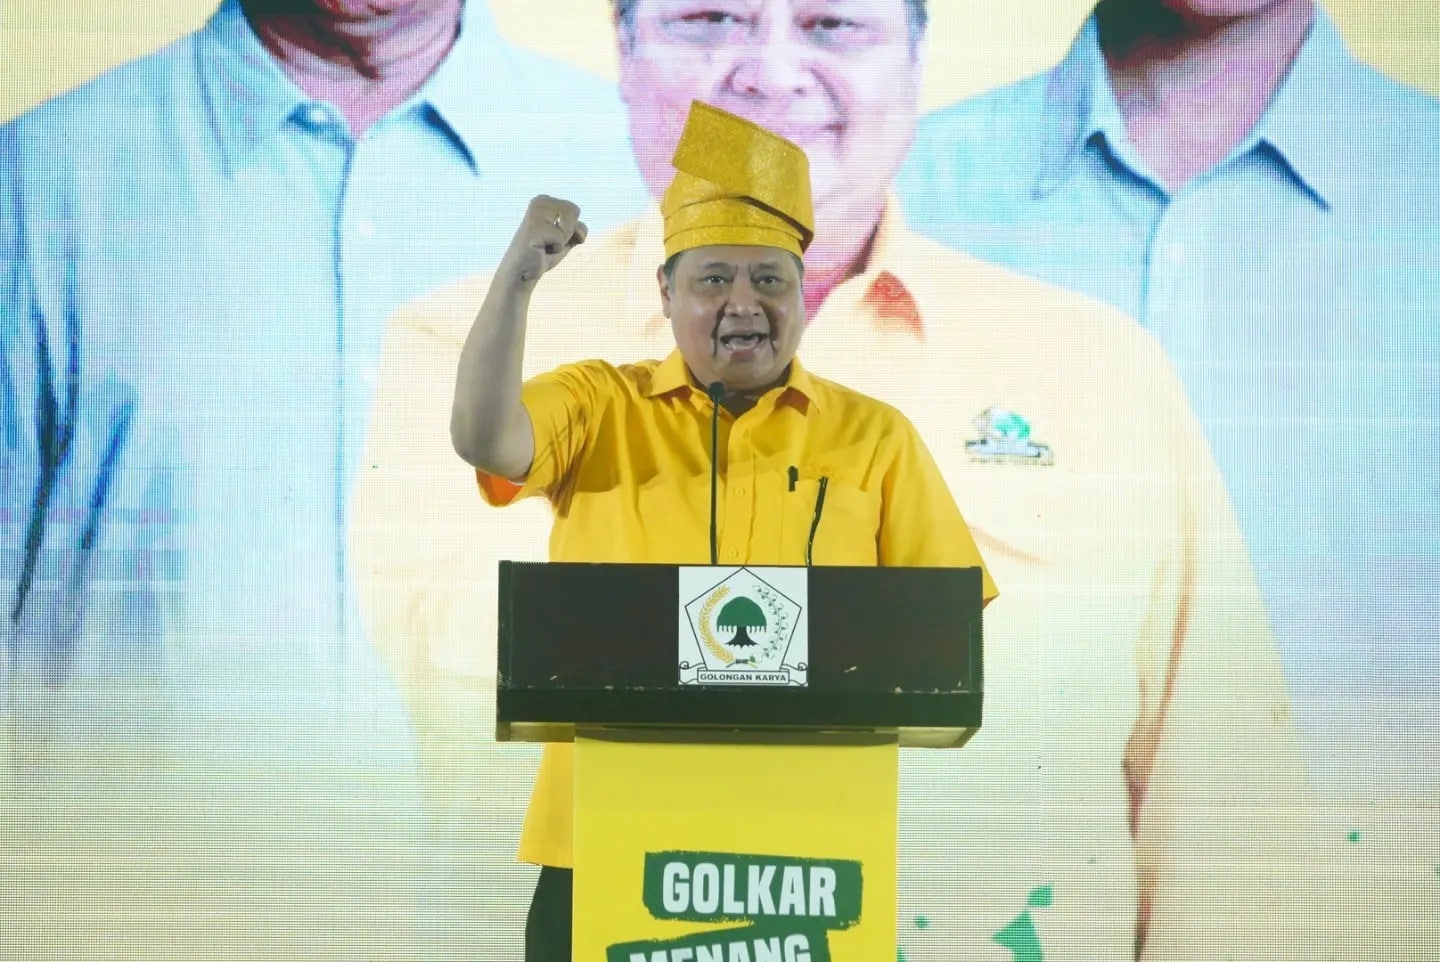 Ketum Partai Golkar Airlangga Hartarto. Foto: IG golkar.indonesia